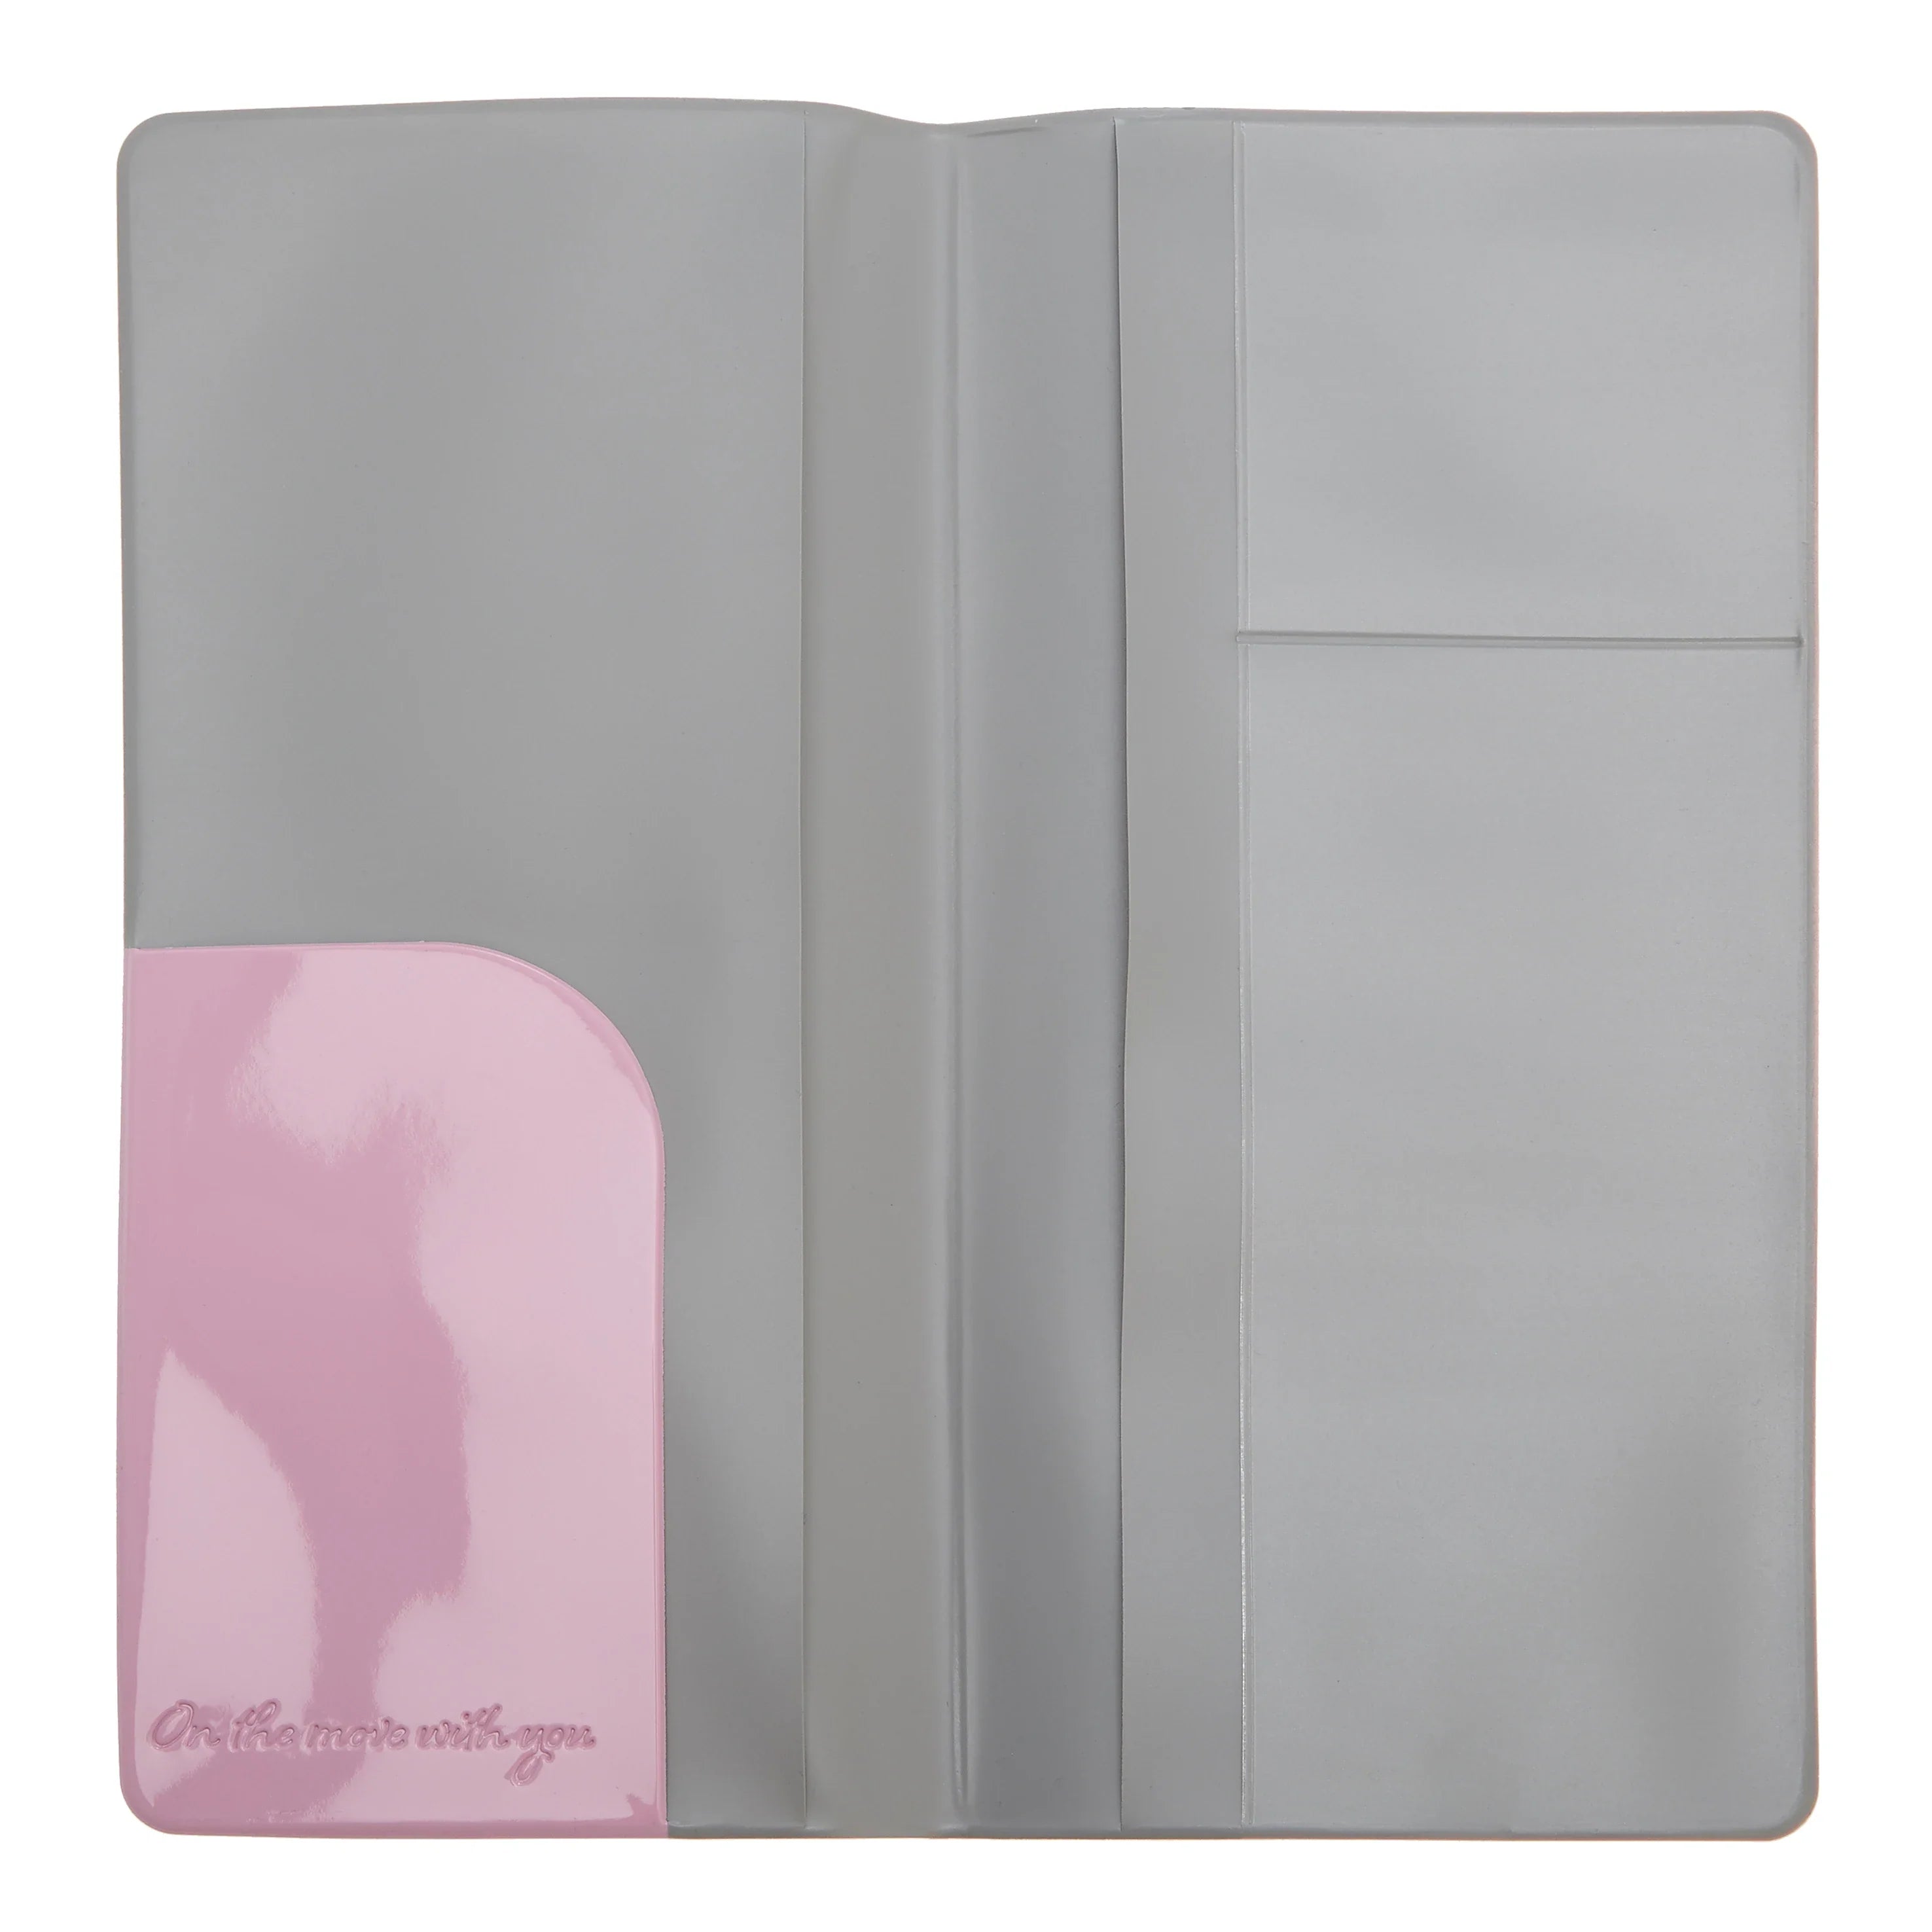 Design Go travel accessories document bag 21 cm - pink